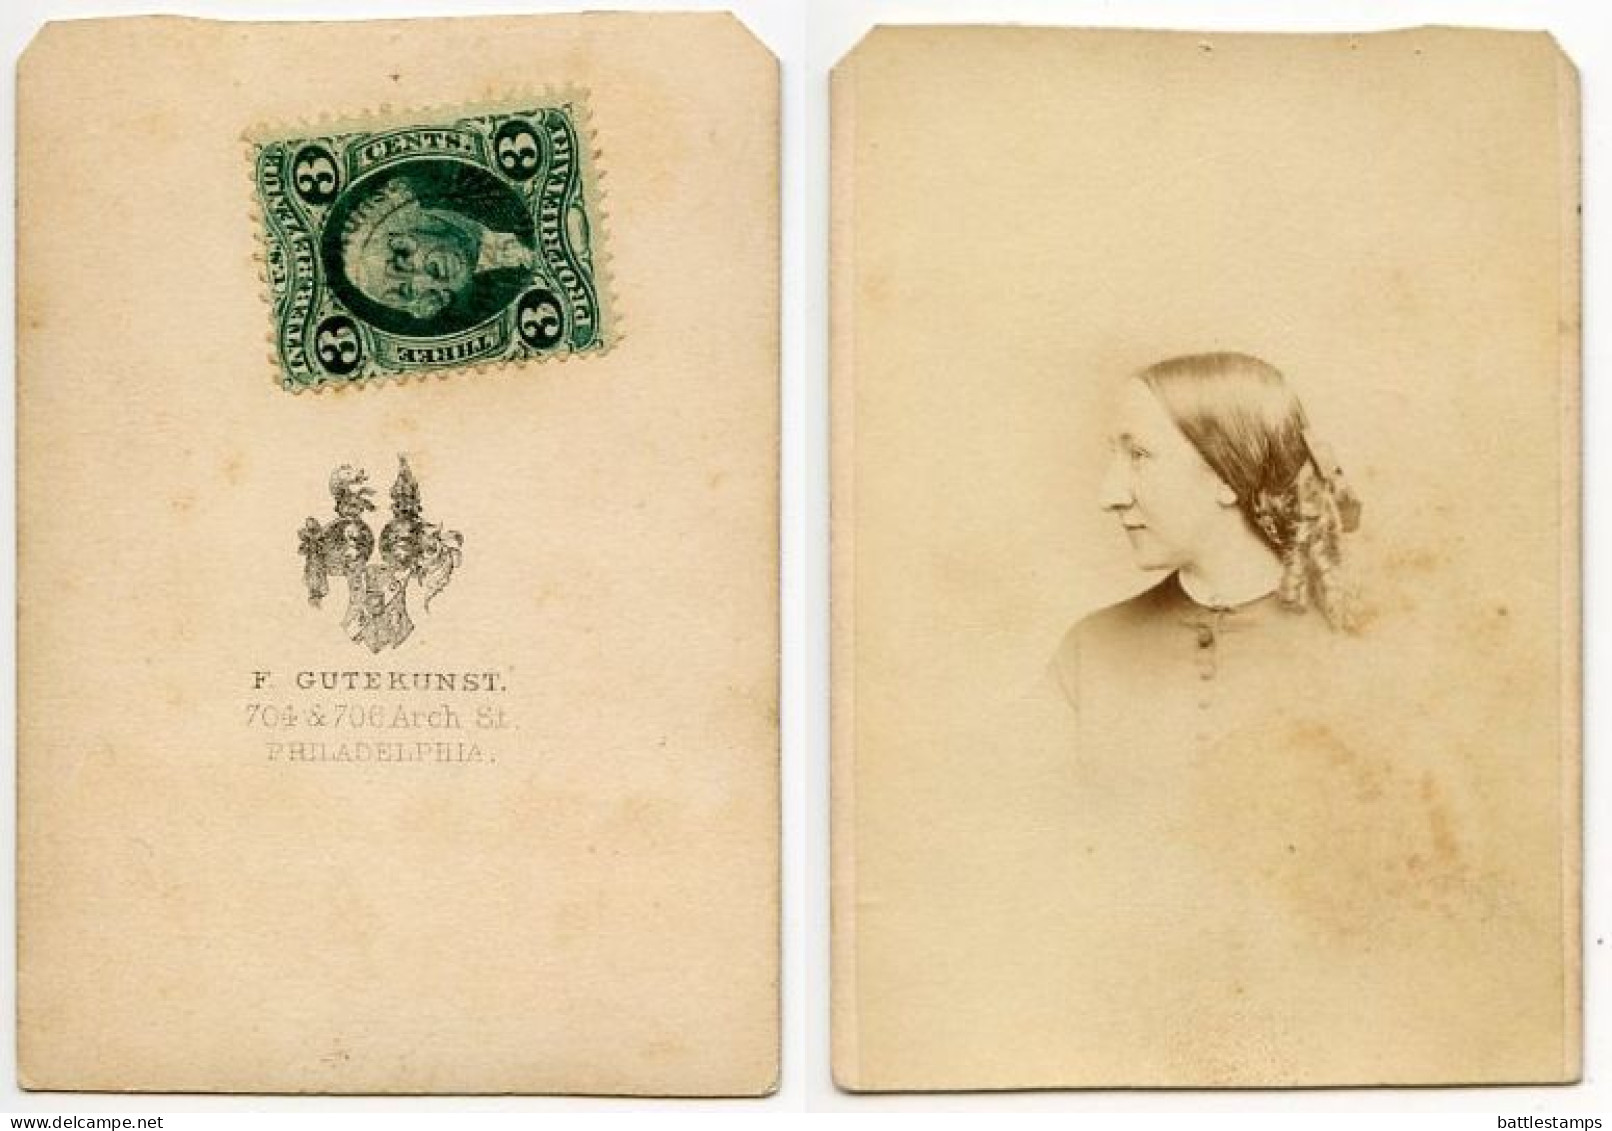 United States 1860‘s Photograph, Woman - F. Gutekun St., Philadelphia Pennsylvania, Scott R18c Revenue Stamp - Fiscali